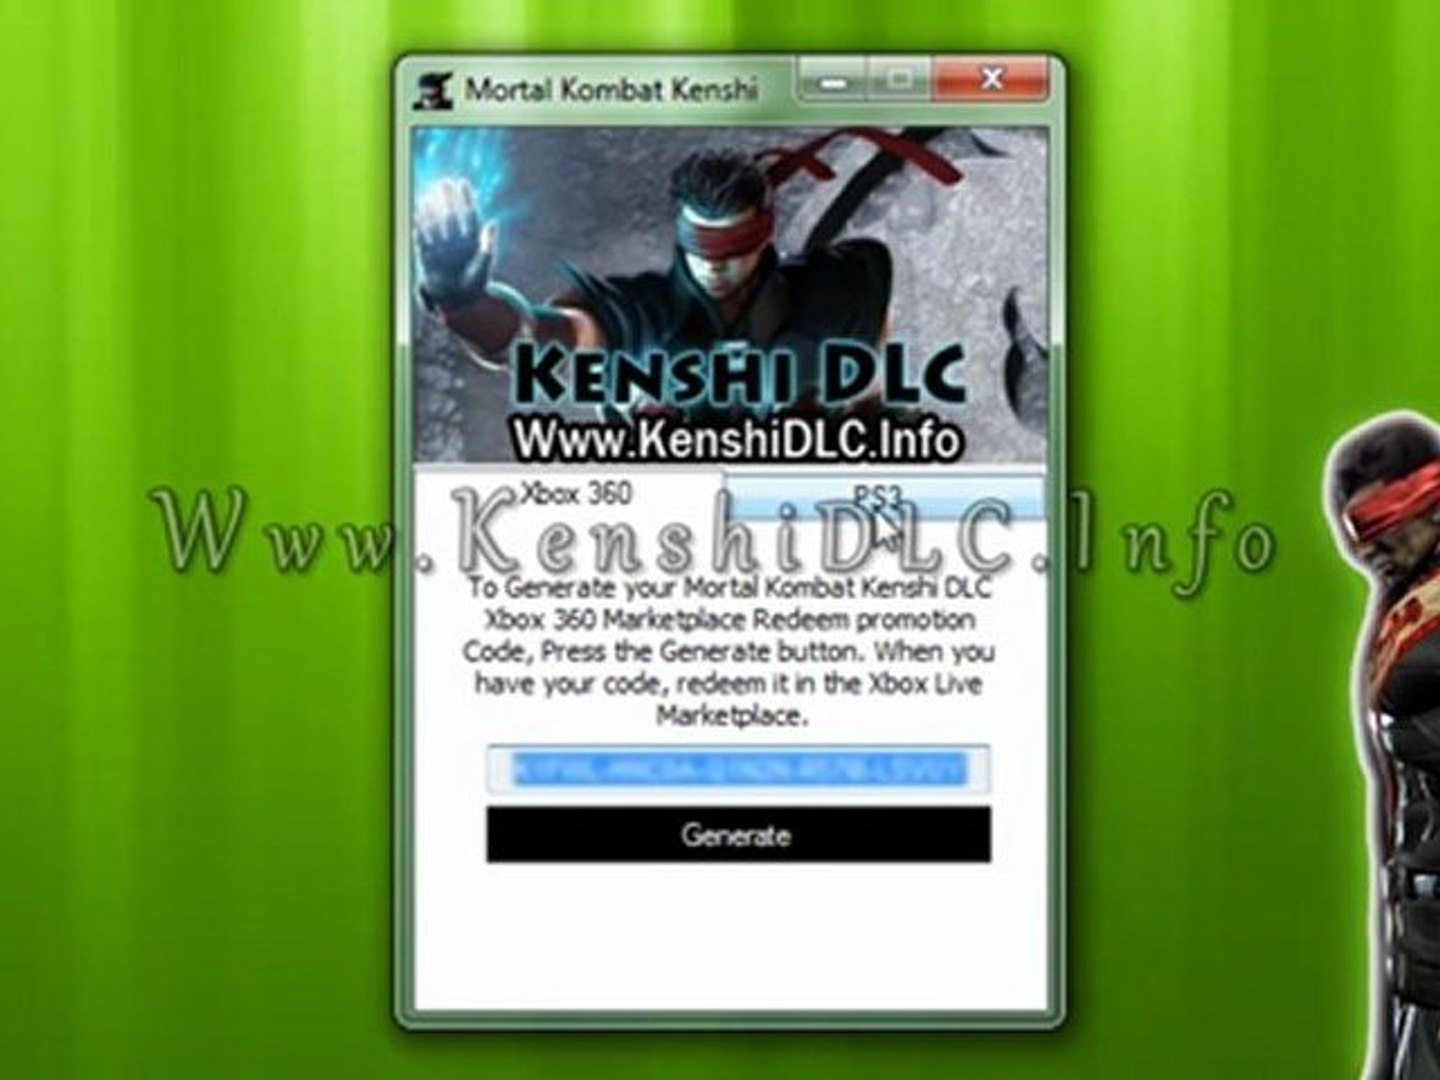 Get Free Mortal Kombat Kenshi DLC keys - Xbox 360 / PS3 Tutorial - video  Dailymotion